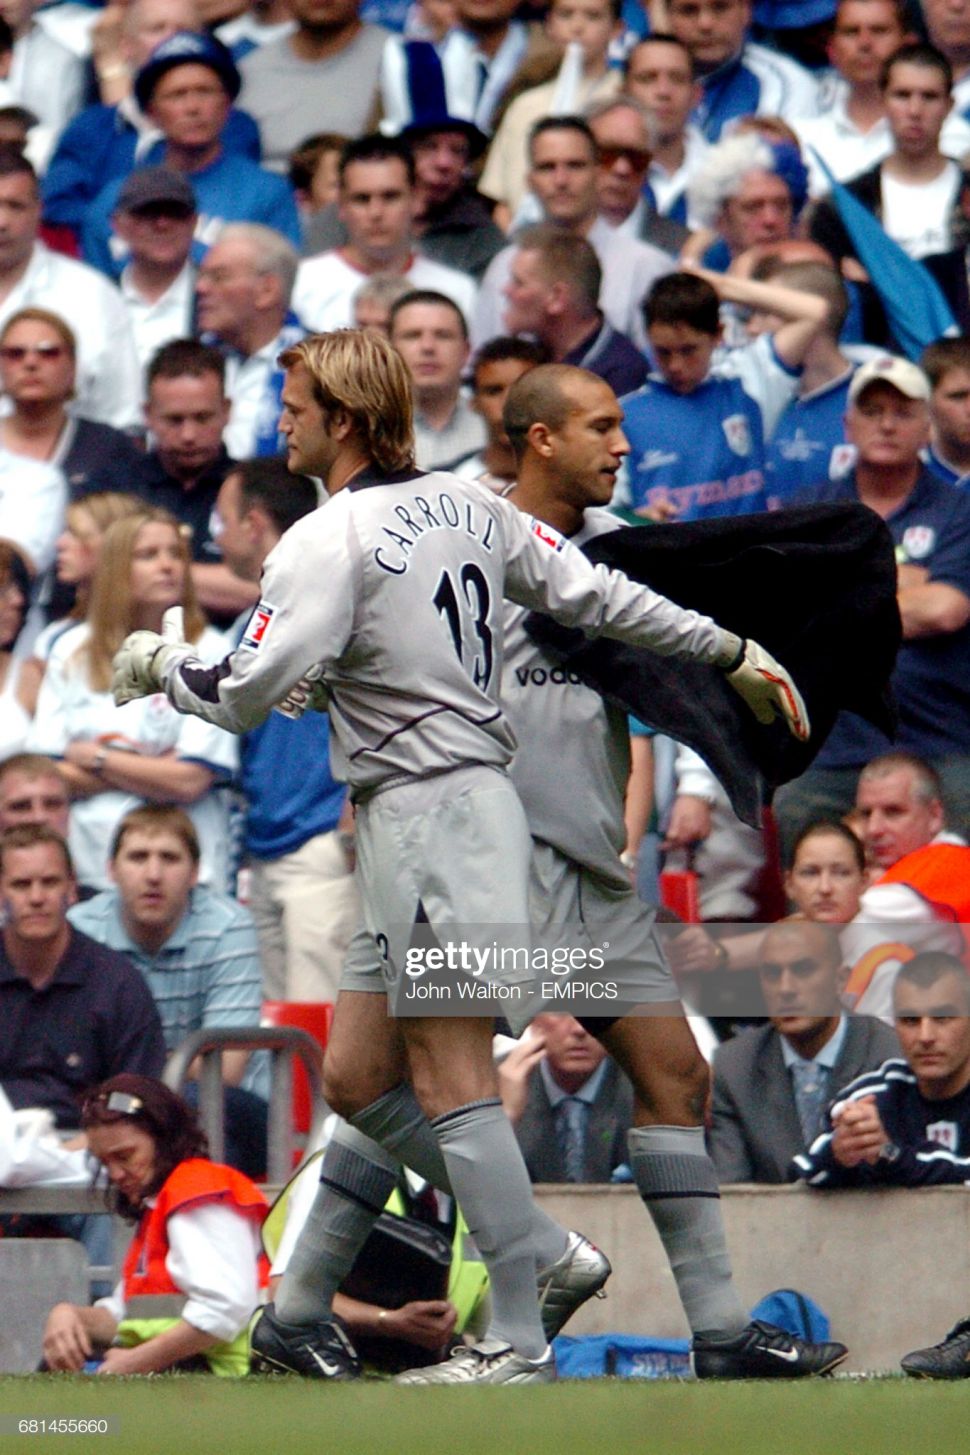 Áo GK Manchester United FA Cup final 2004 goalkeeper 2002 2003 shirt